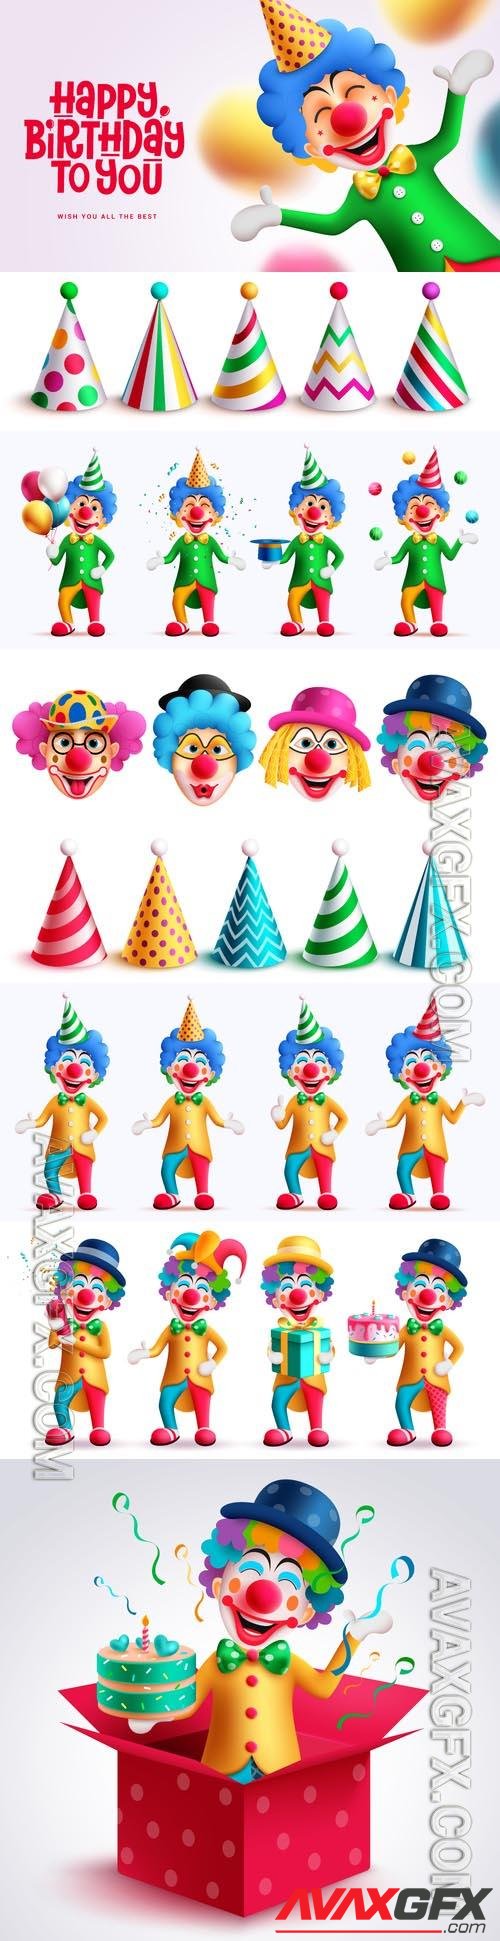 Birthday clown character vector design, happy birthday text design